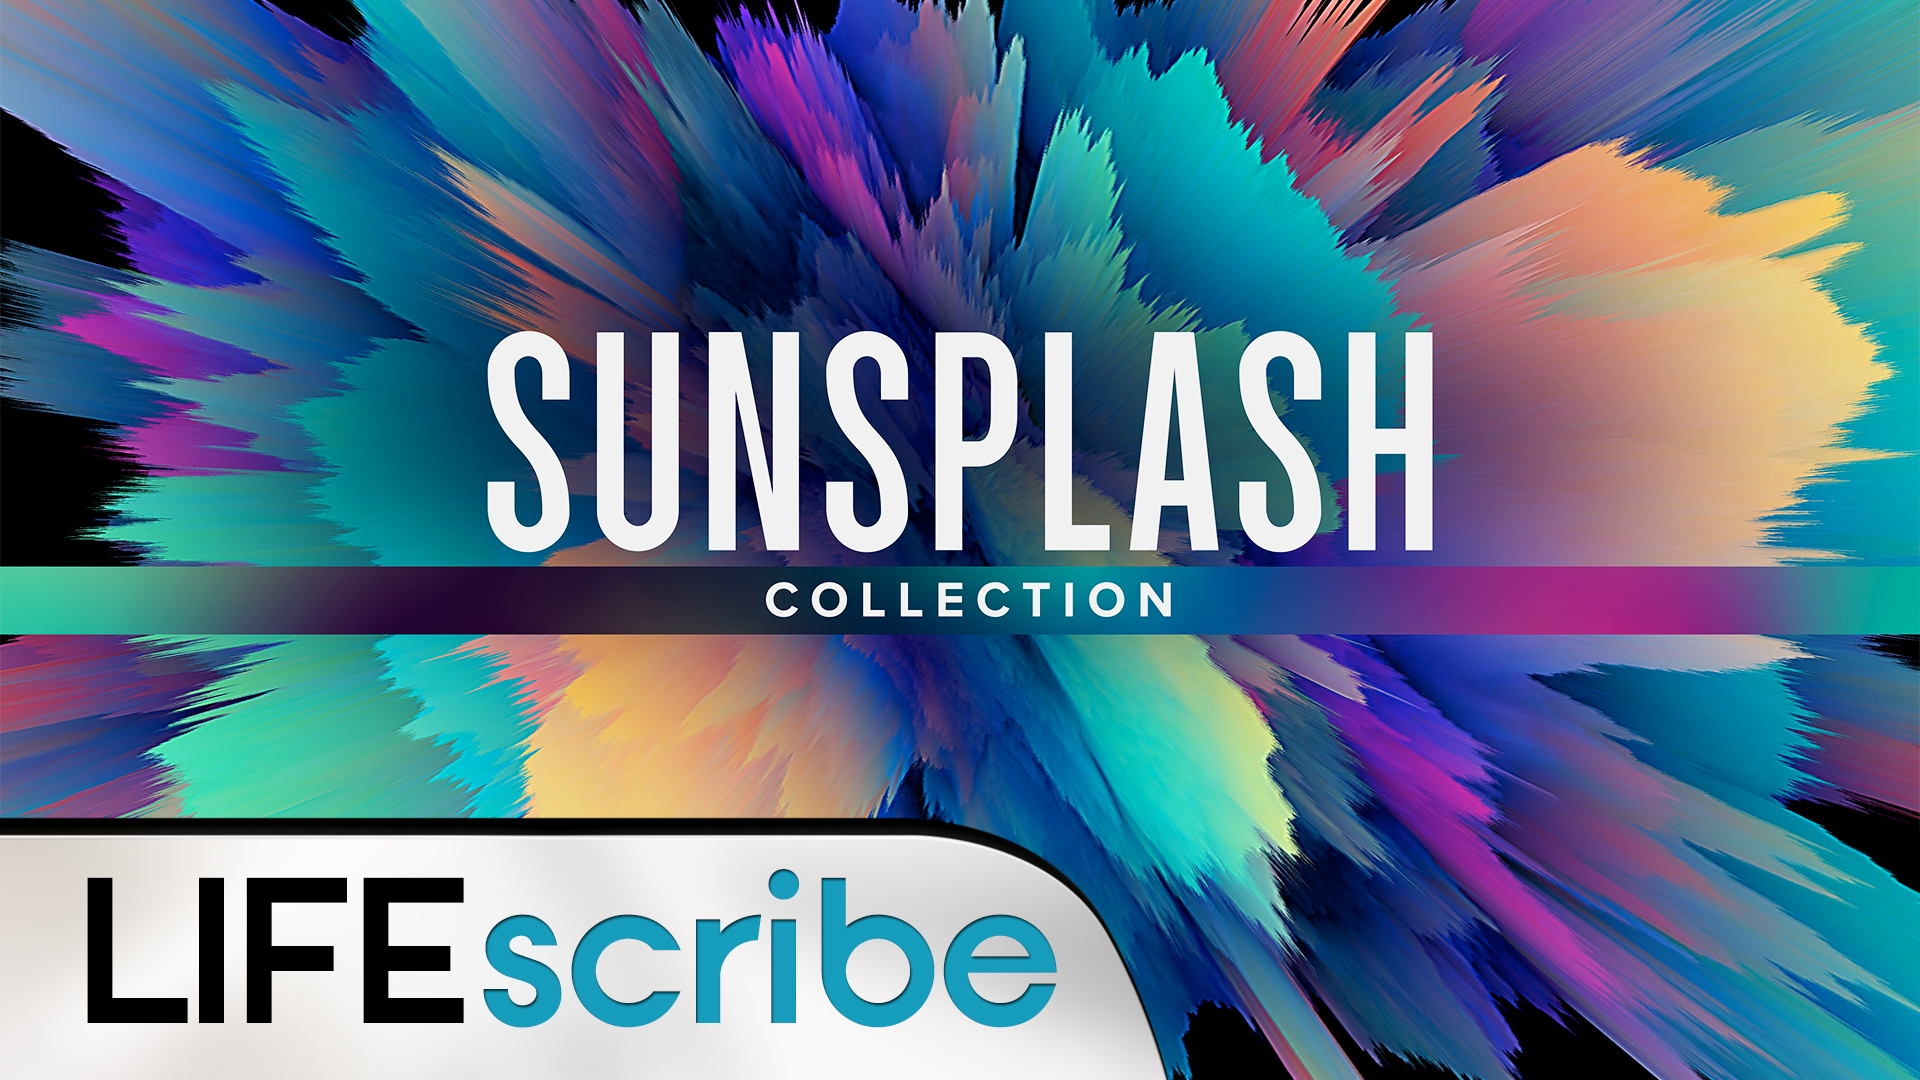 Sunsplash Collection